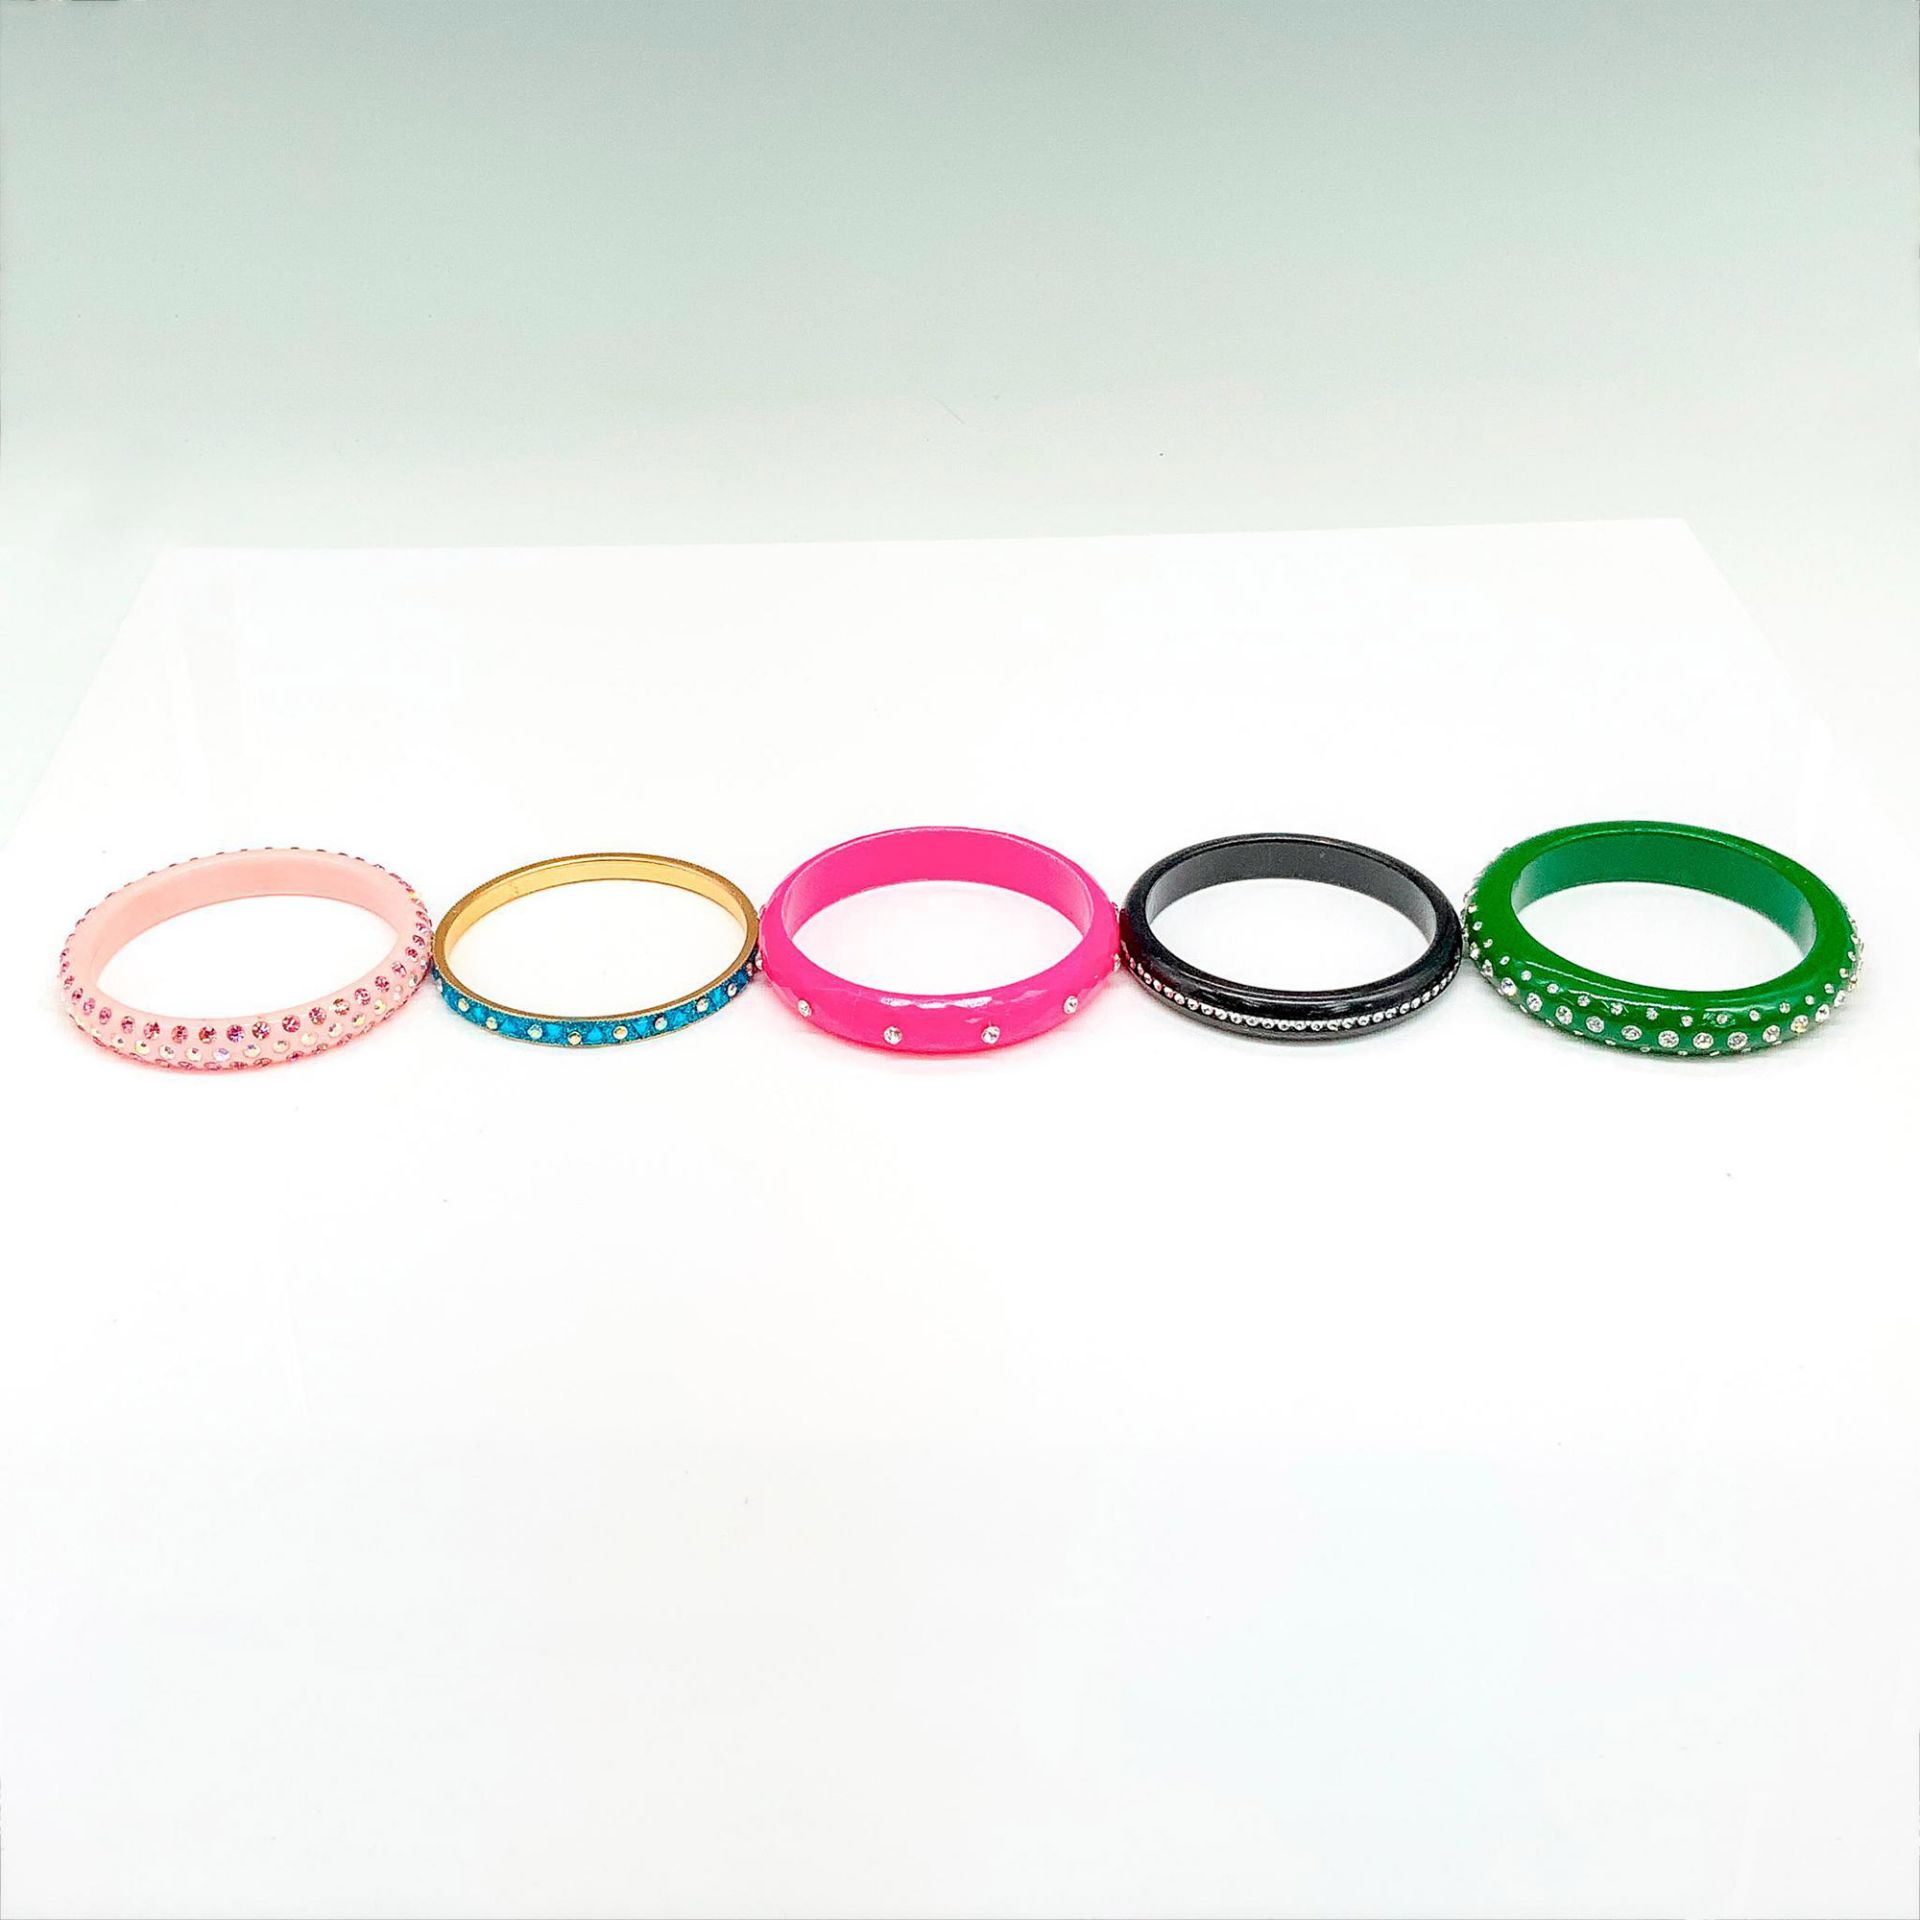 Lot of 5 Colorful Plastic and Rhinestone Bangle Bracelets - Image 3 of 3